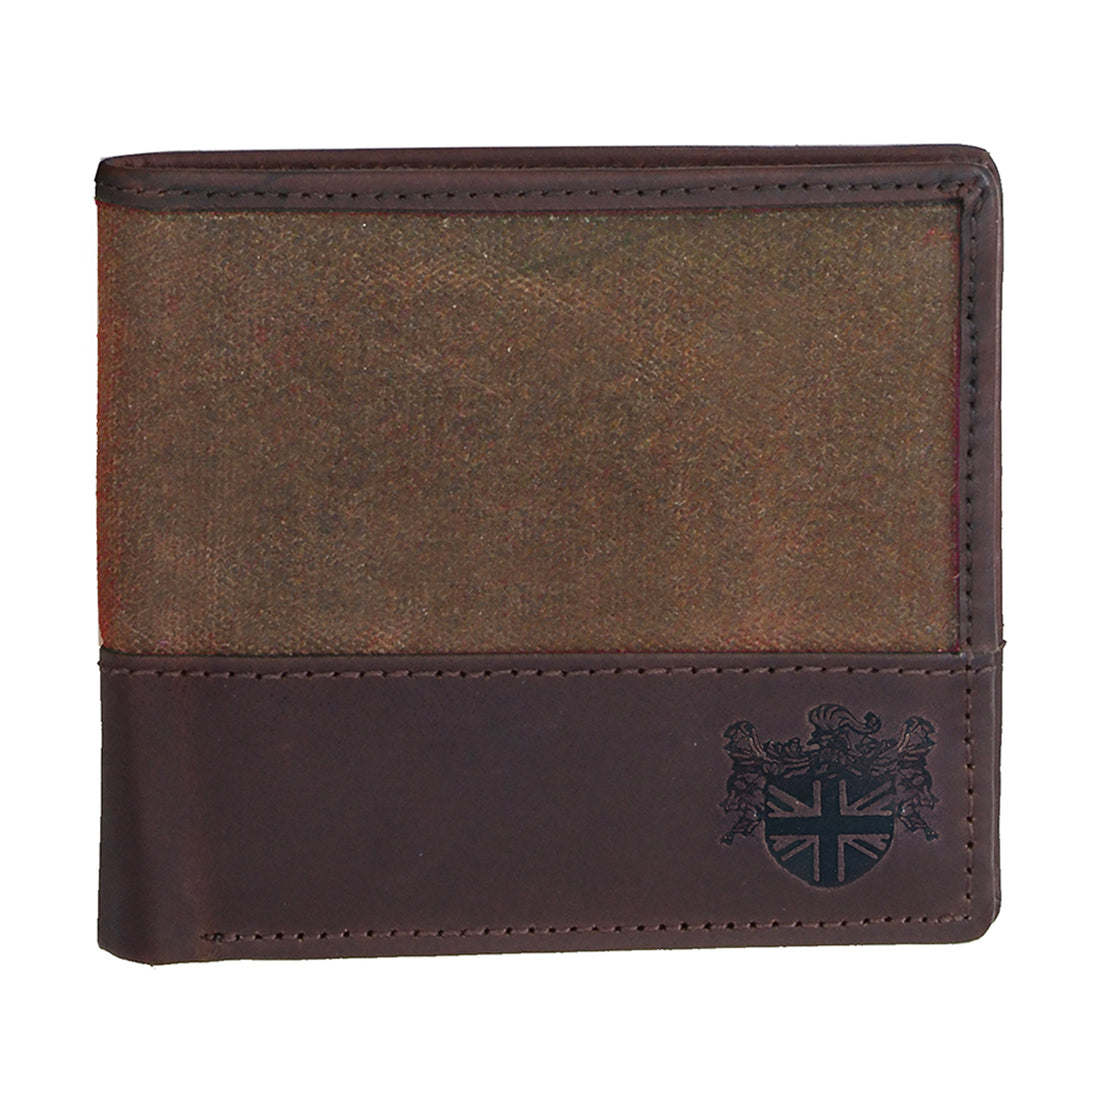 British Bag Co. Brown Wax Canvas Wallet